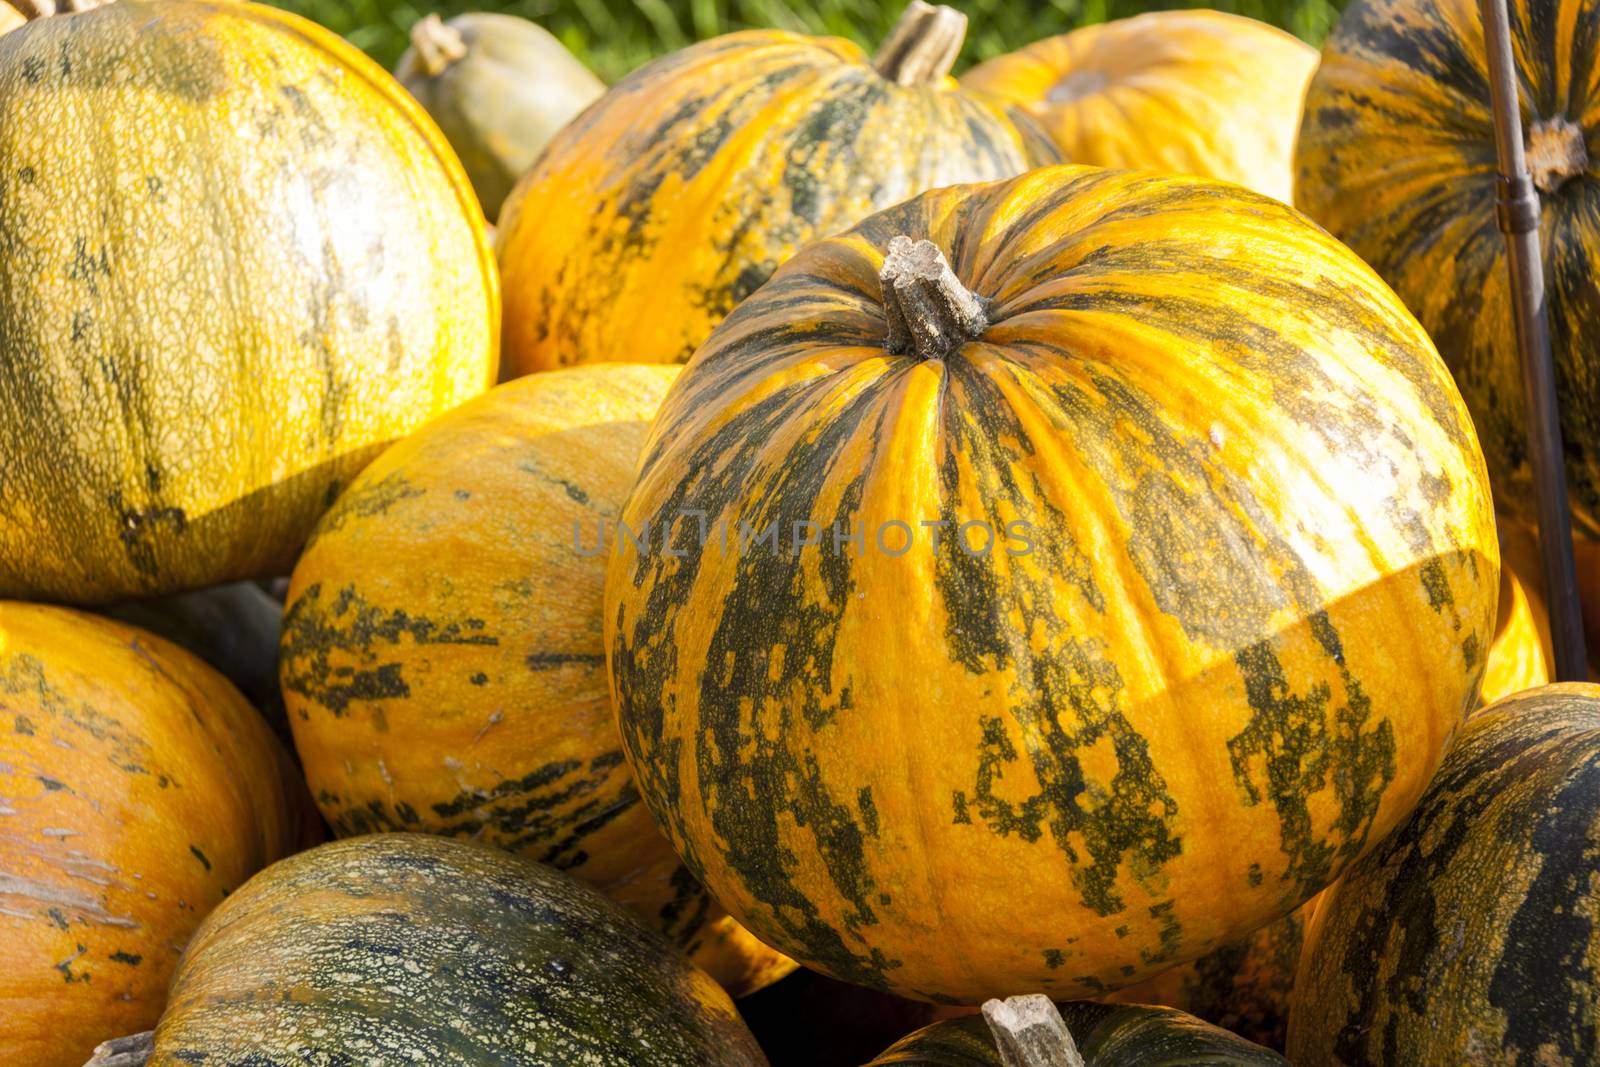 Oil Lady Godiva cucurbita pumpkin pumpkins from autumn harvest  by juniart